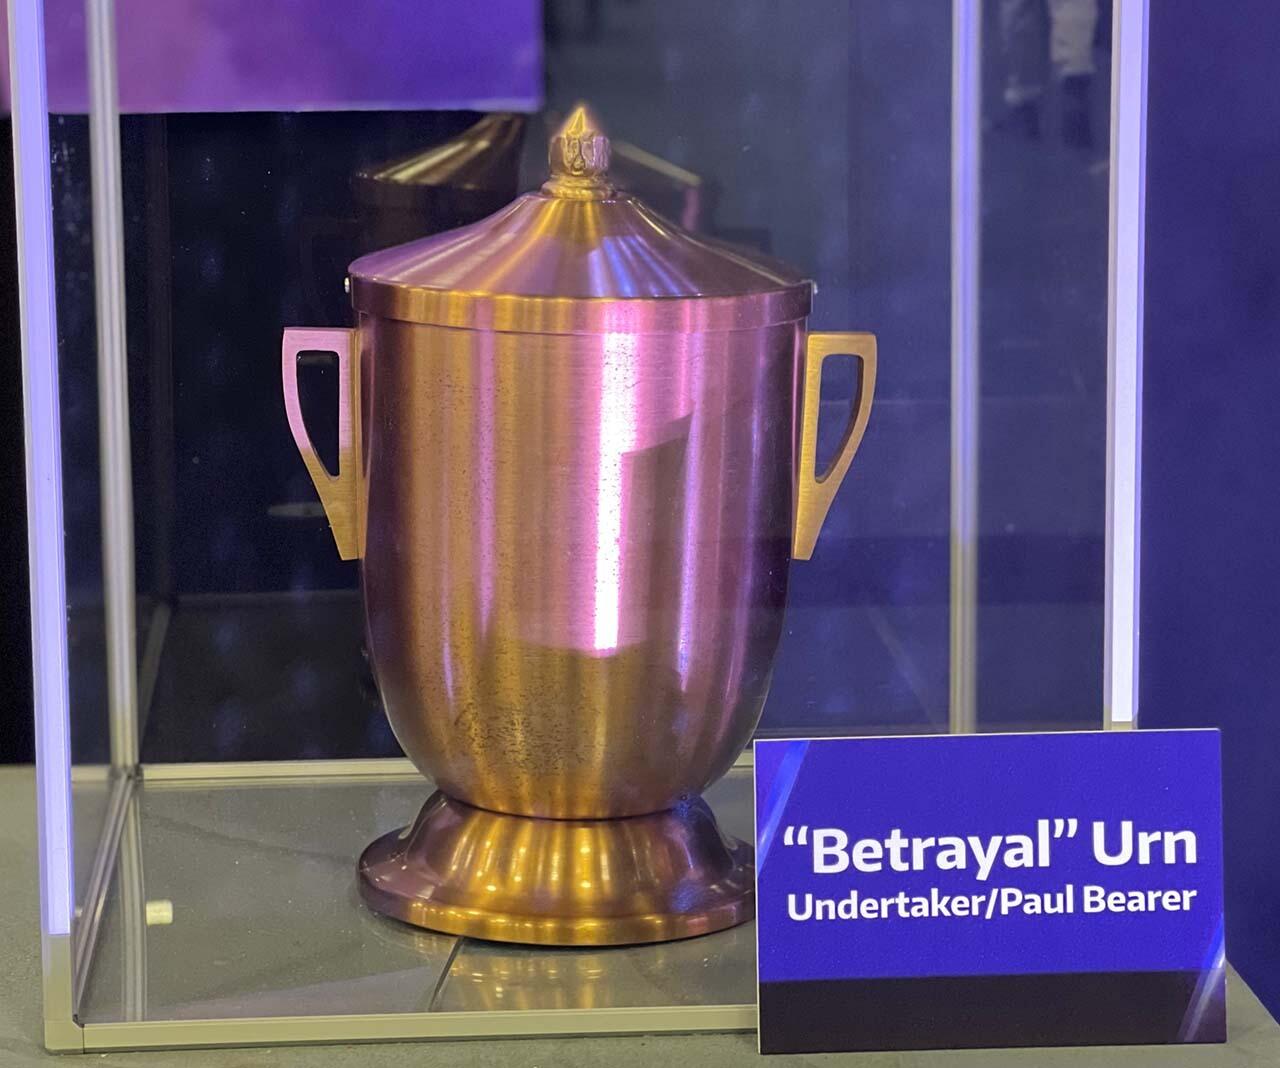 Betrayal Urn